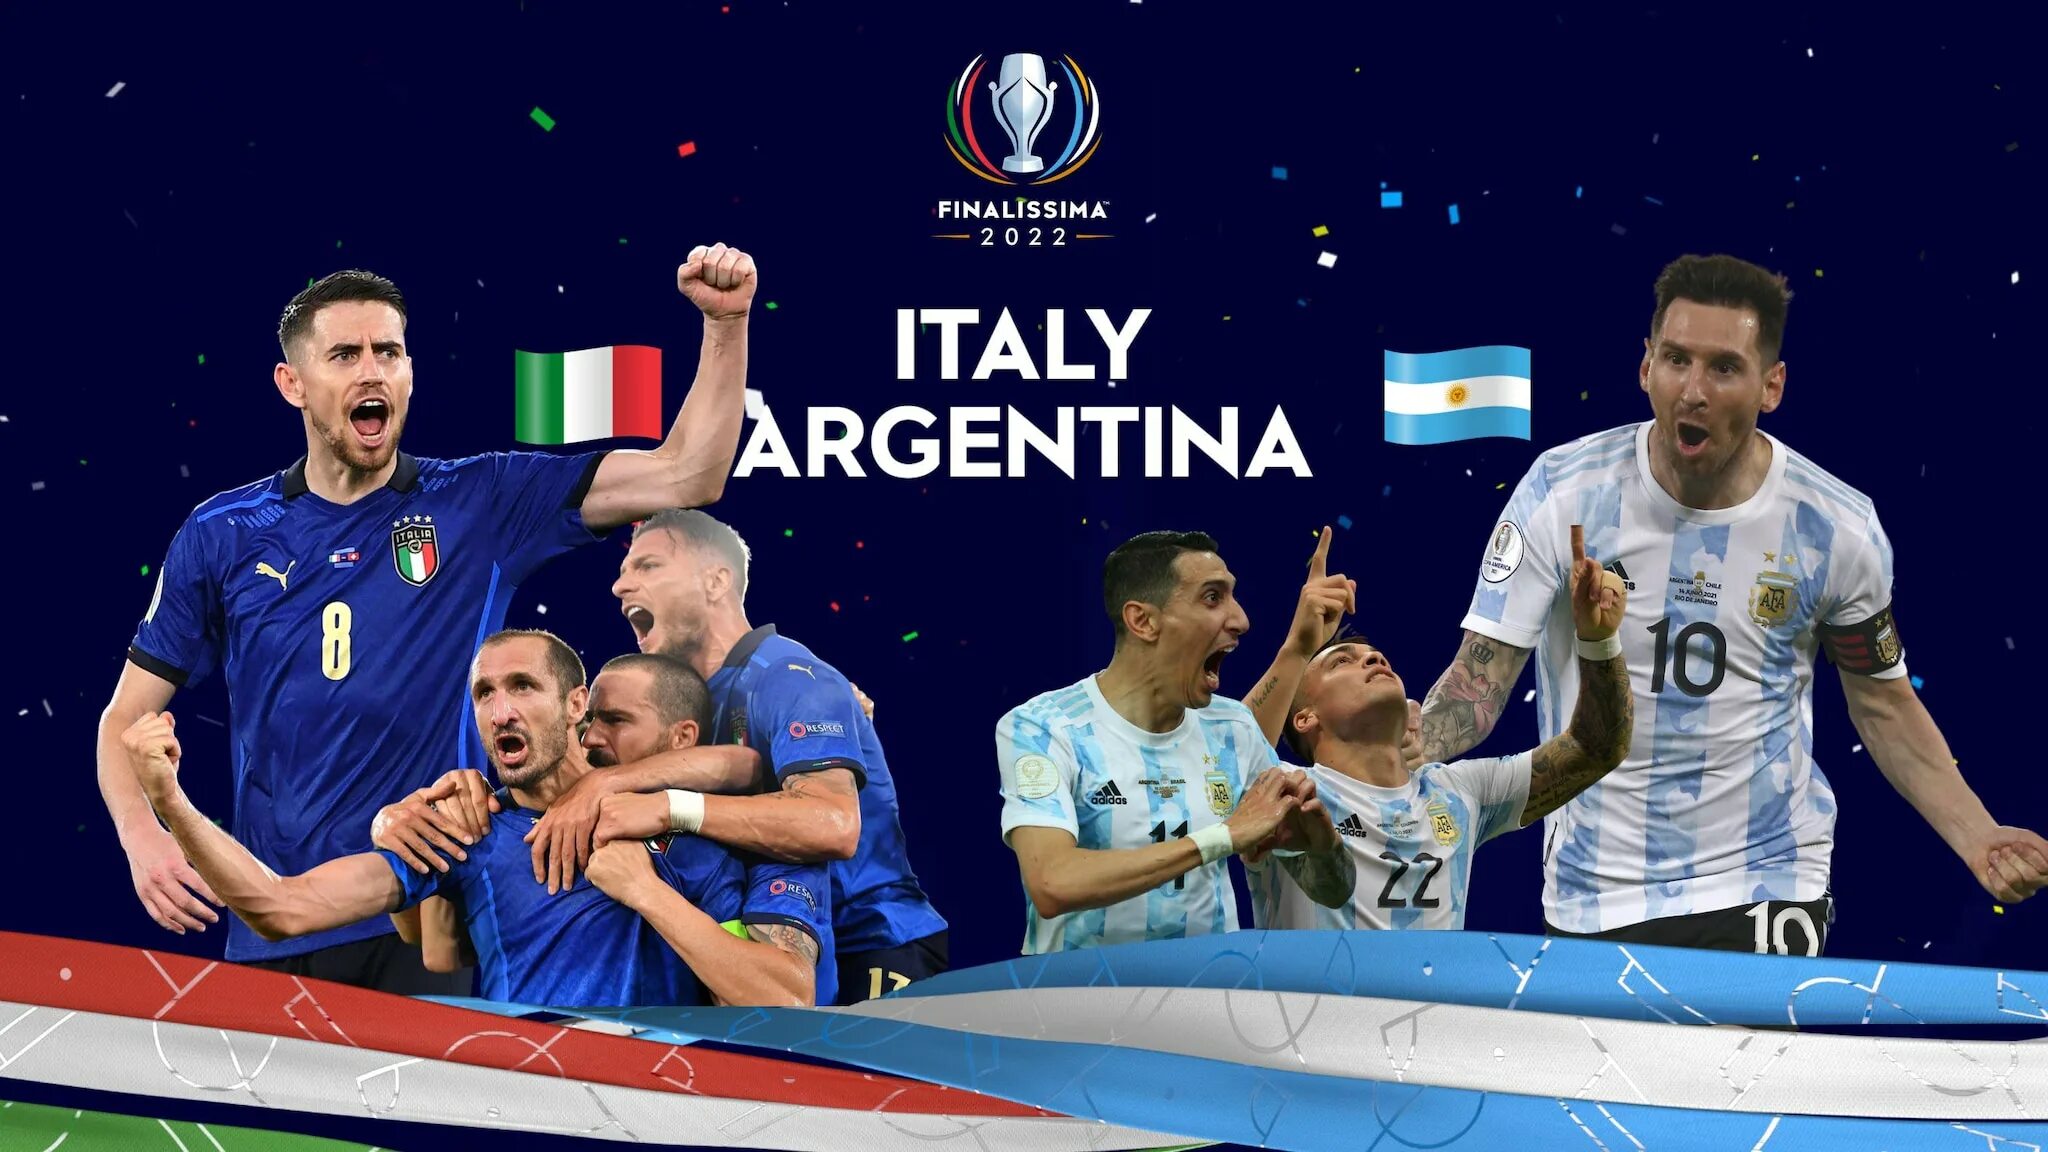 1 2 июня 2018. Финалиссимо Италия Аргентина 2022. Футбол финалиссима-2022. Италия Аргентина 1 июня 2022. Финалисима футбол 2022 Италия Аргентина.